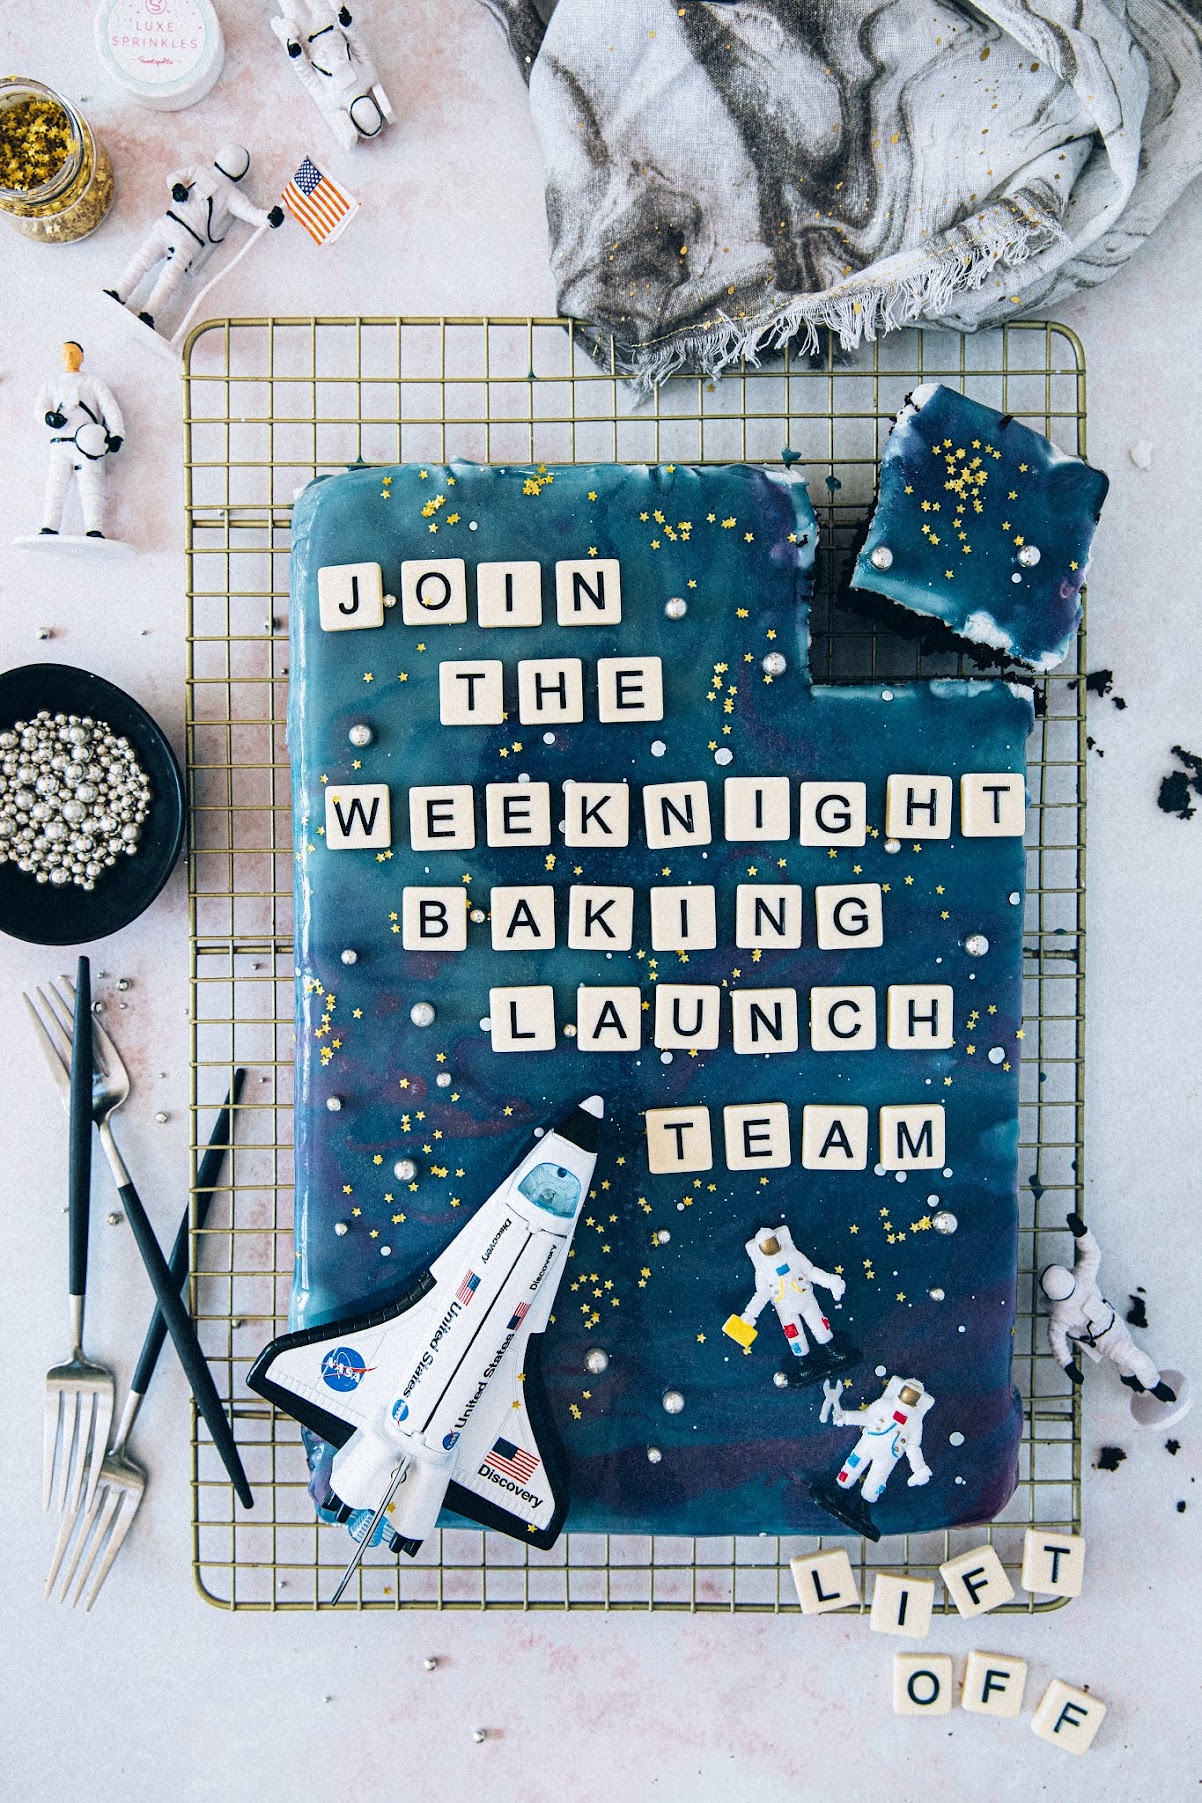 join the #weeknightbakingbook launch team!